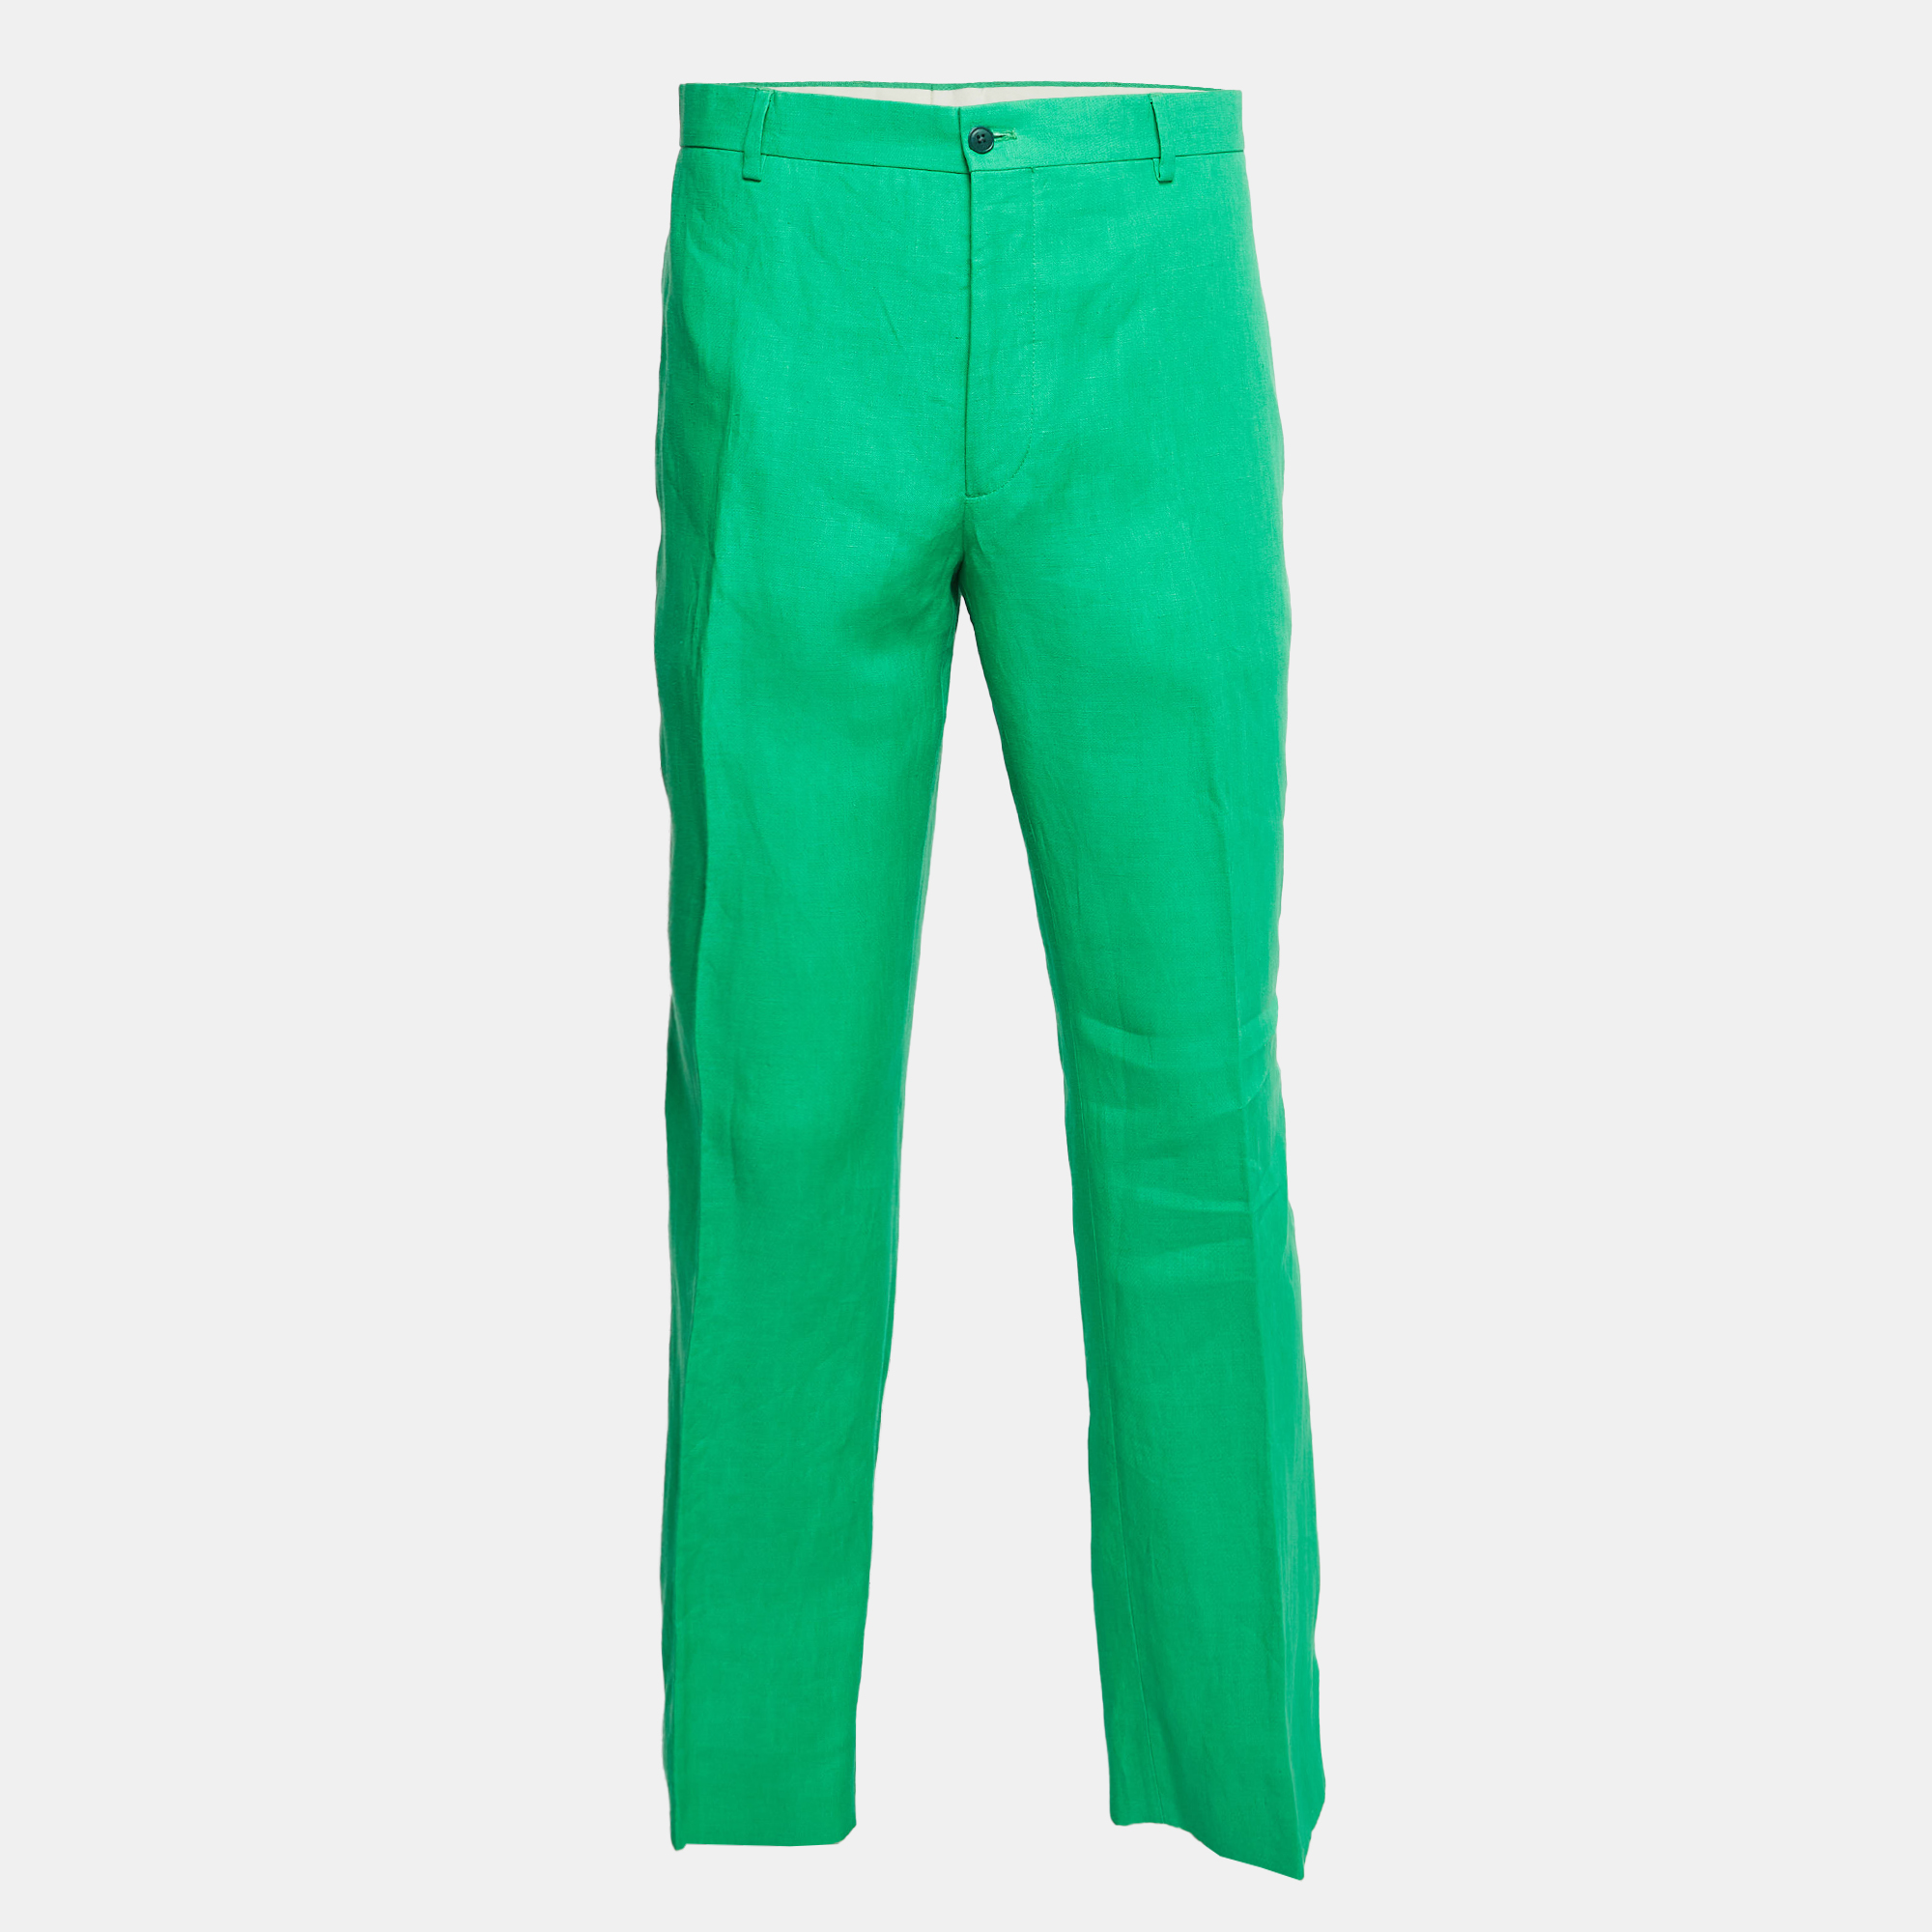 Ralph lauren purple label green linen trousers xxl